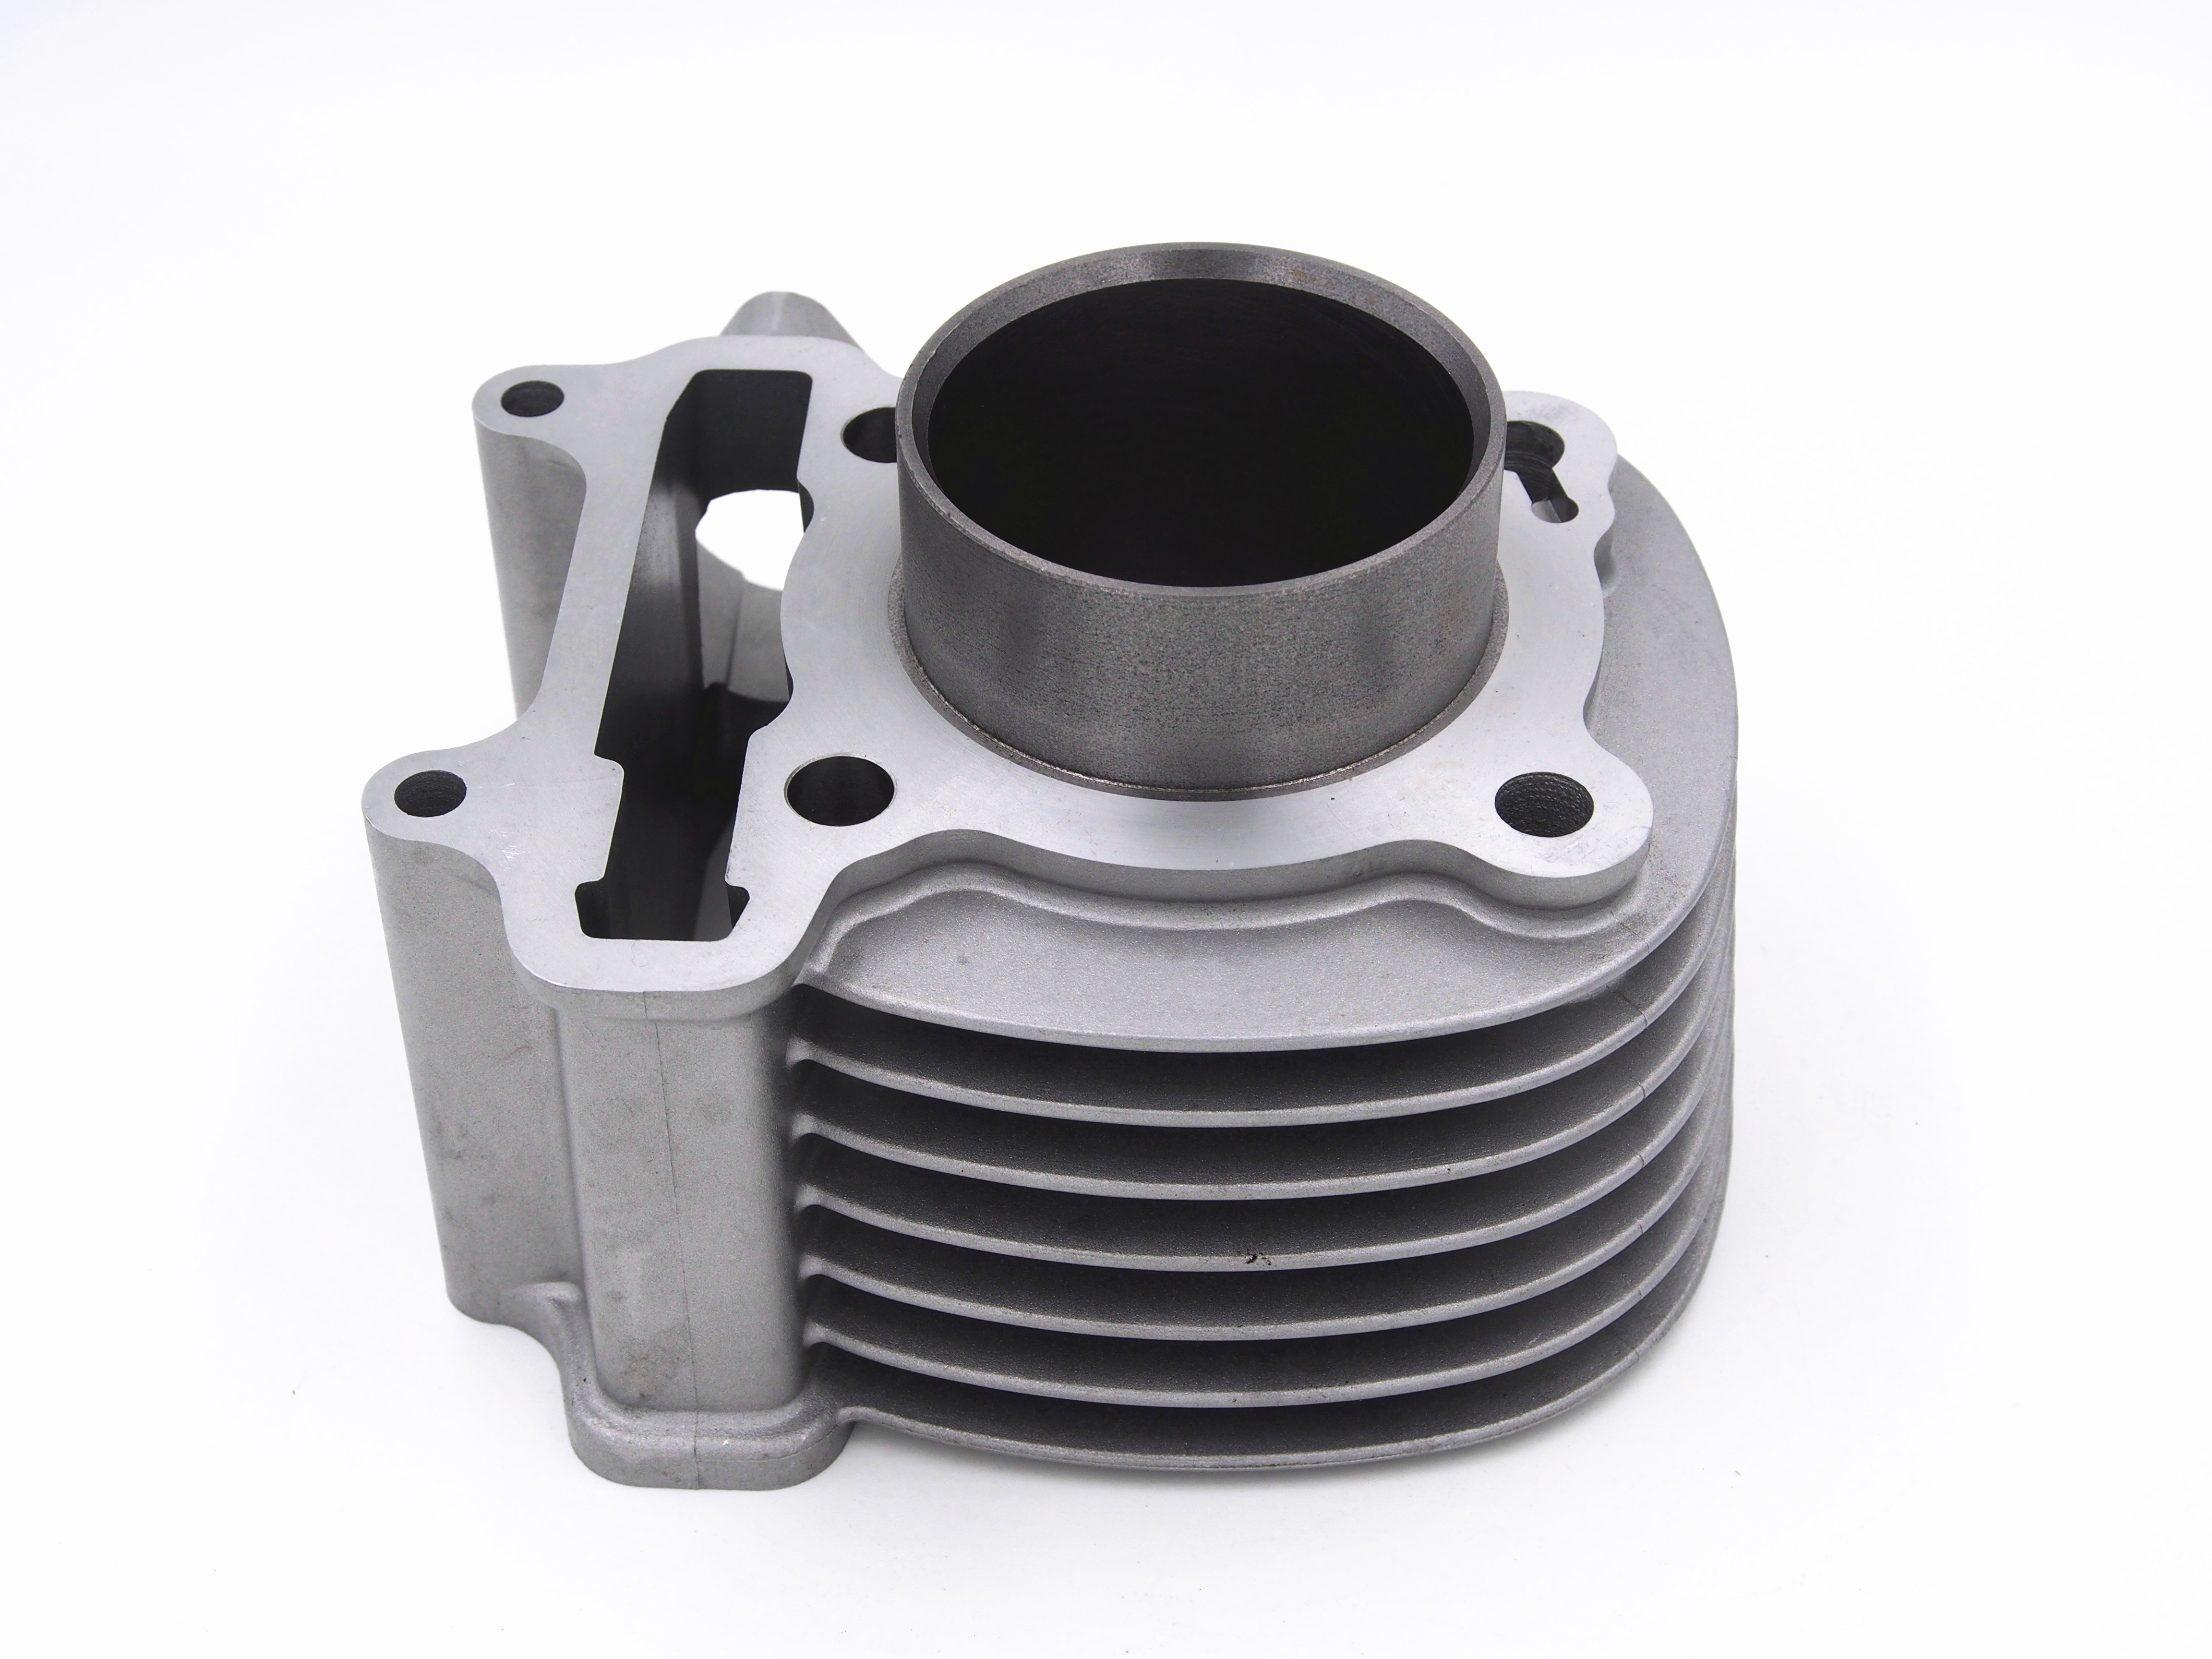 SYM Four Stroke Cylinder Block 52.4mm Bore Diameter For Motorcycle Engine ARA